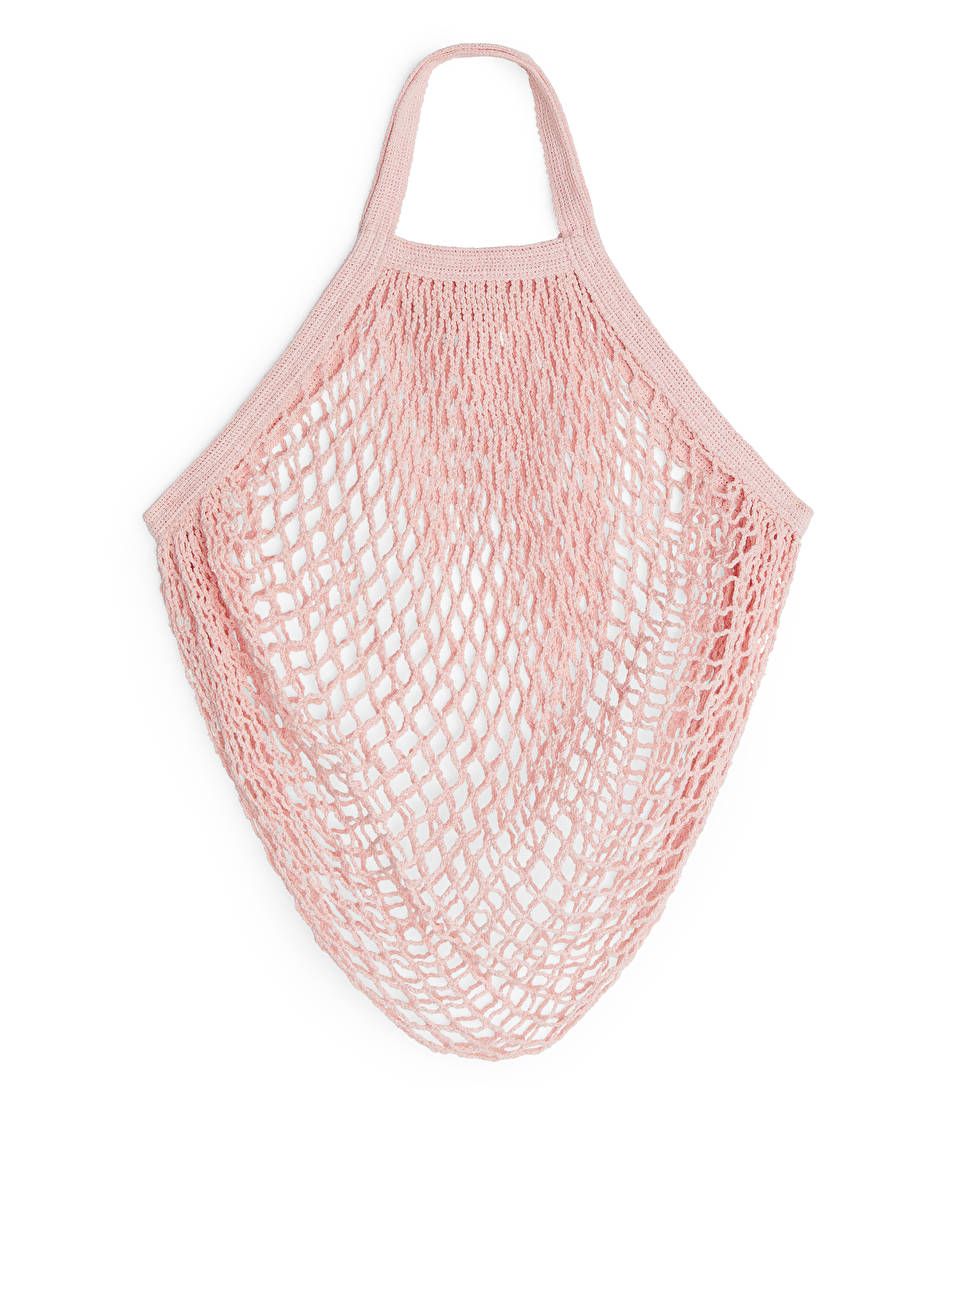 Turtle Bags String Bag - Pink - ARKET GB | ARKET (US&UK)